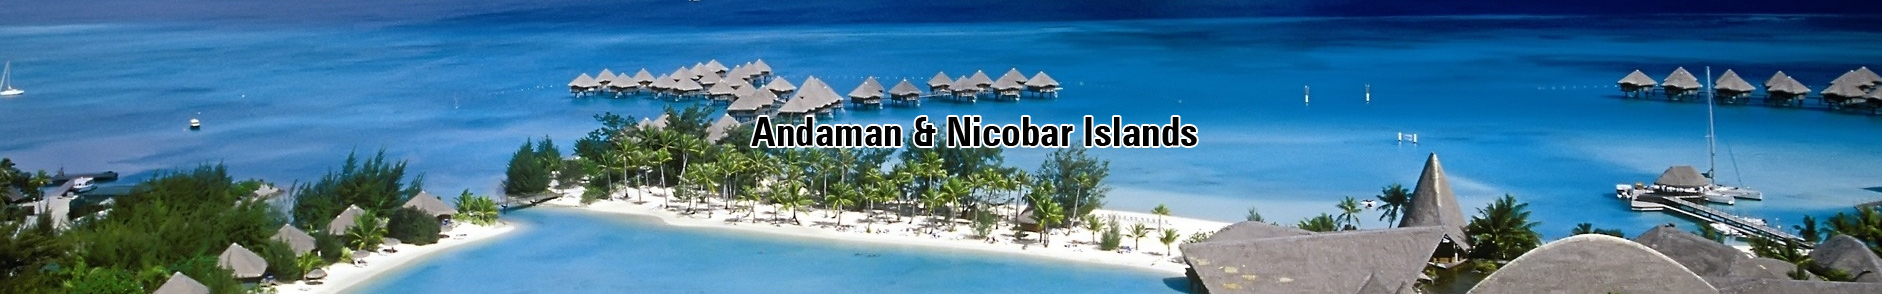 Island Vinnies Tropical Beach Cabanas and Dive Centre, Andaman